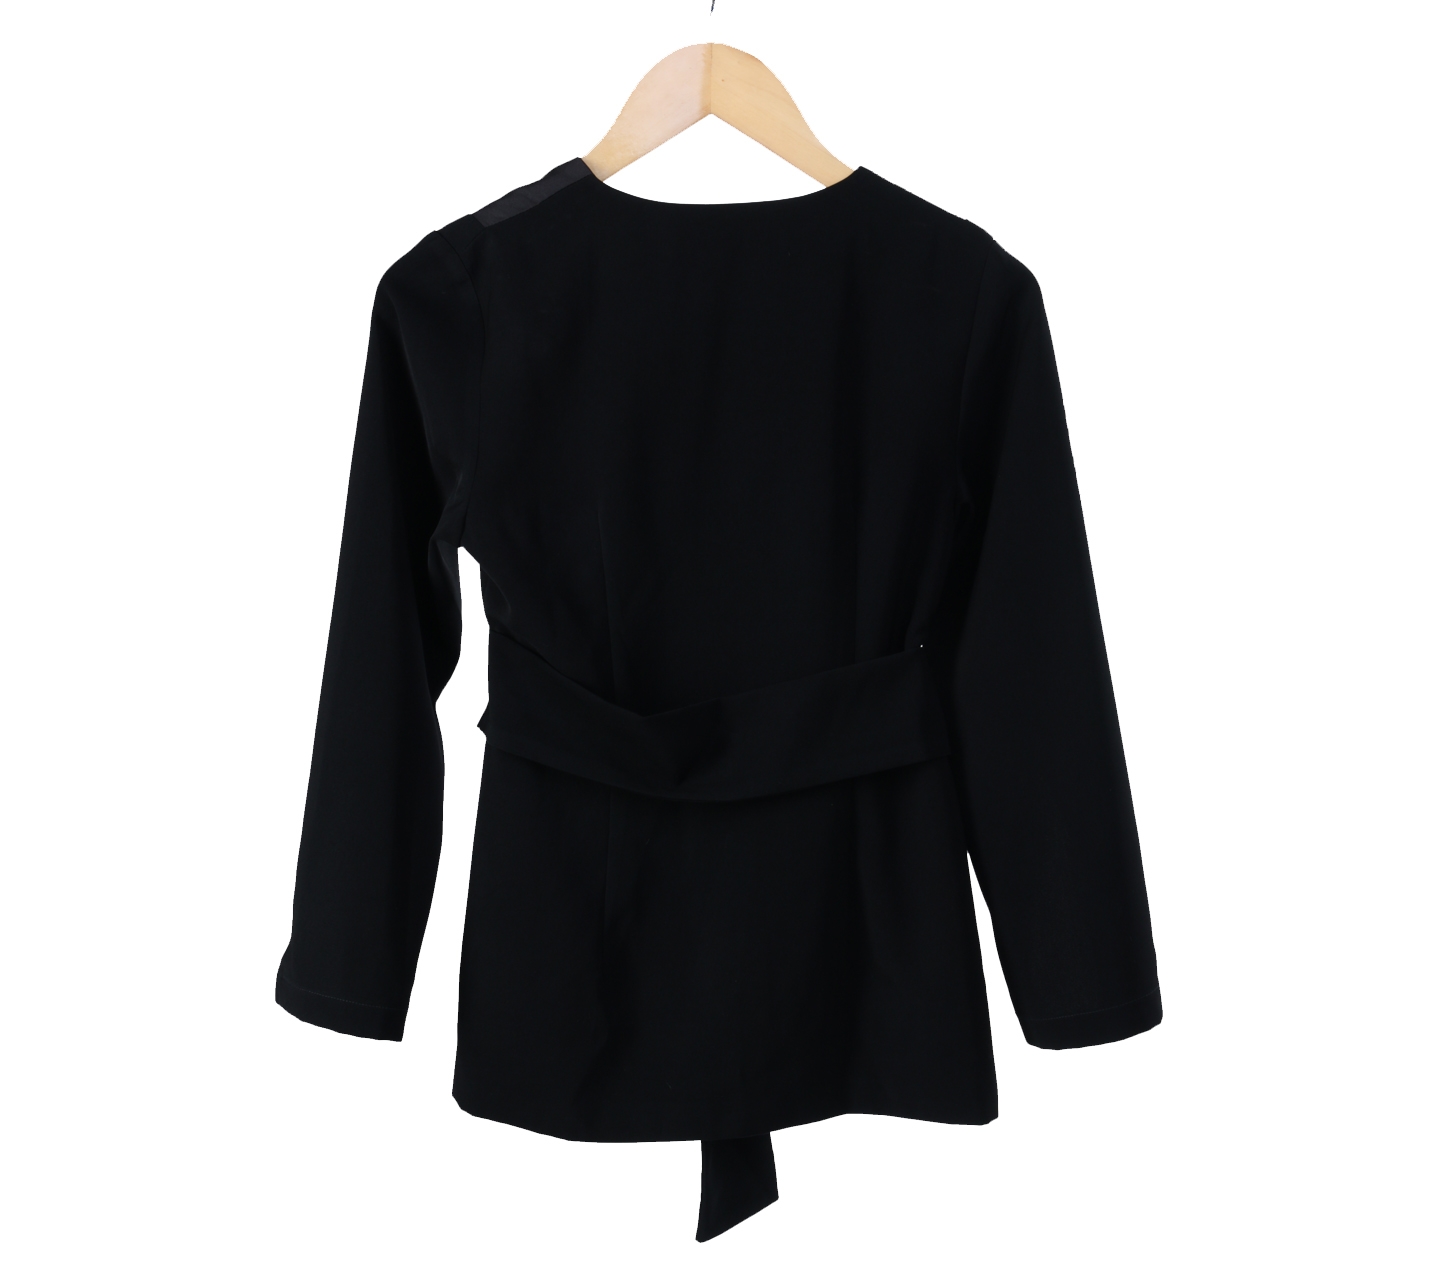 Missori Black Outerwear